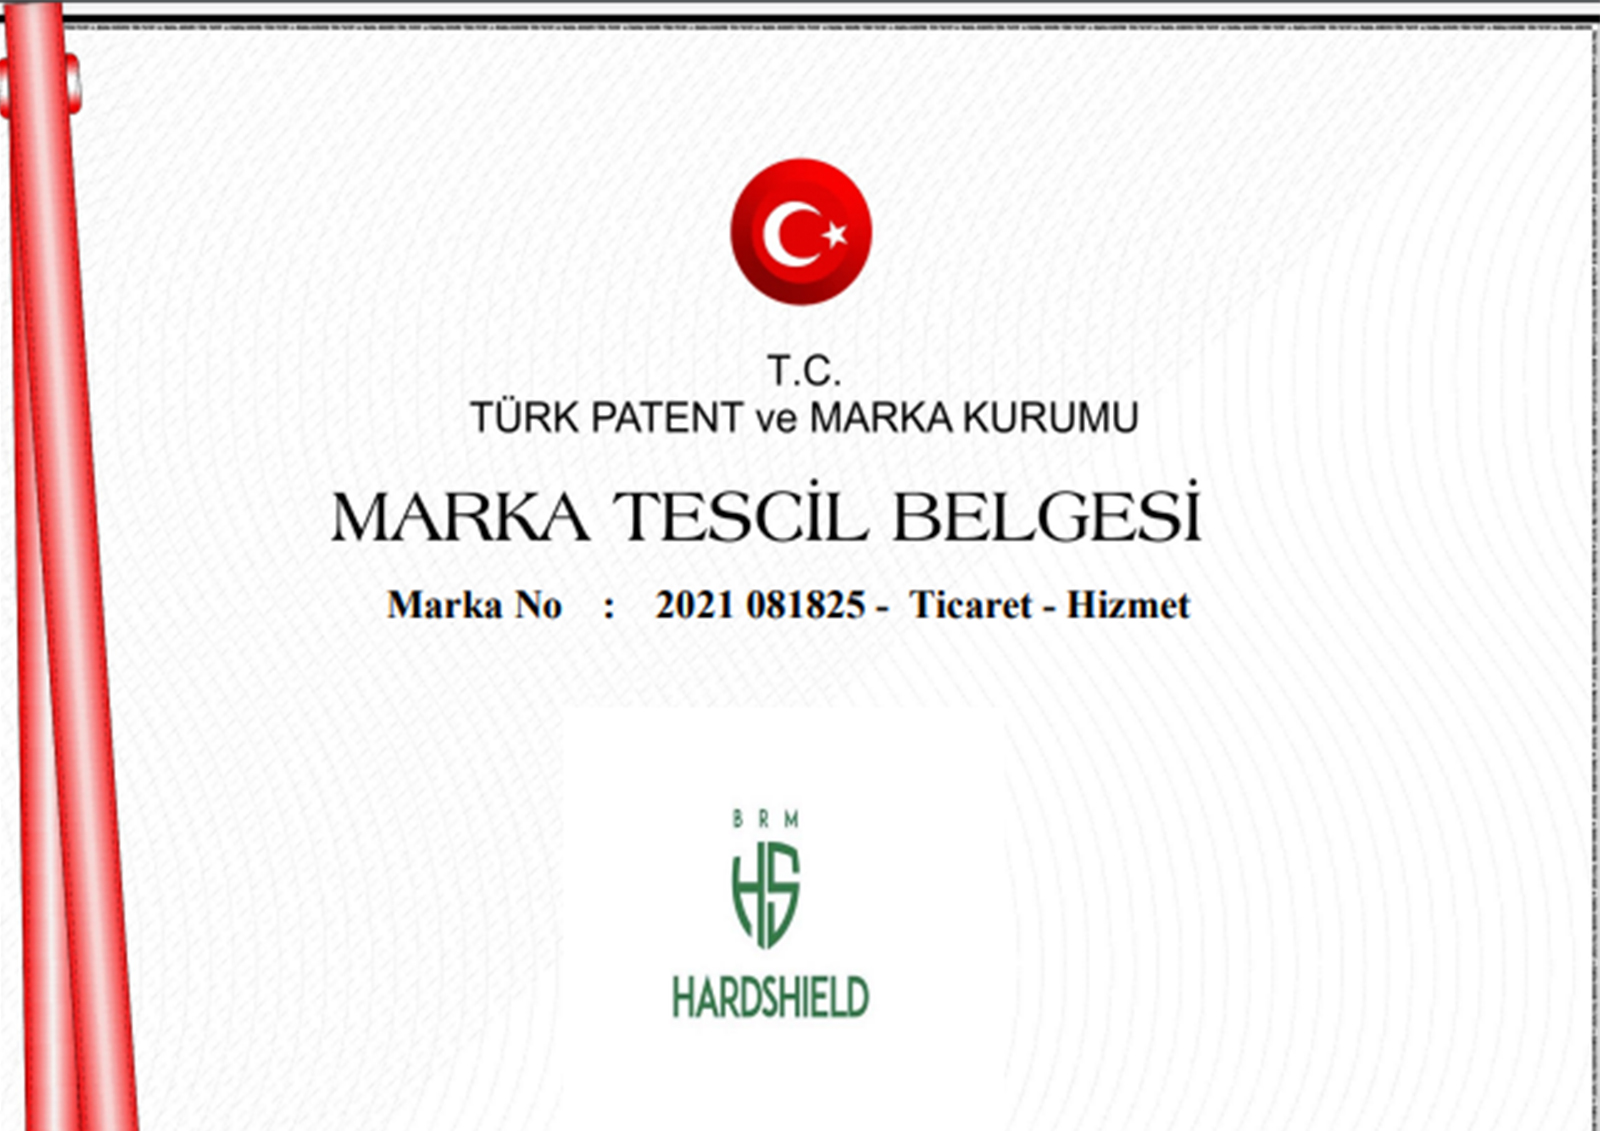 we-received-hardshield-trademark-registration-certificate